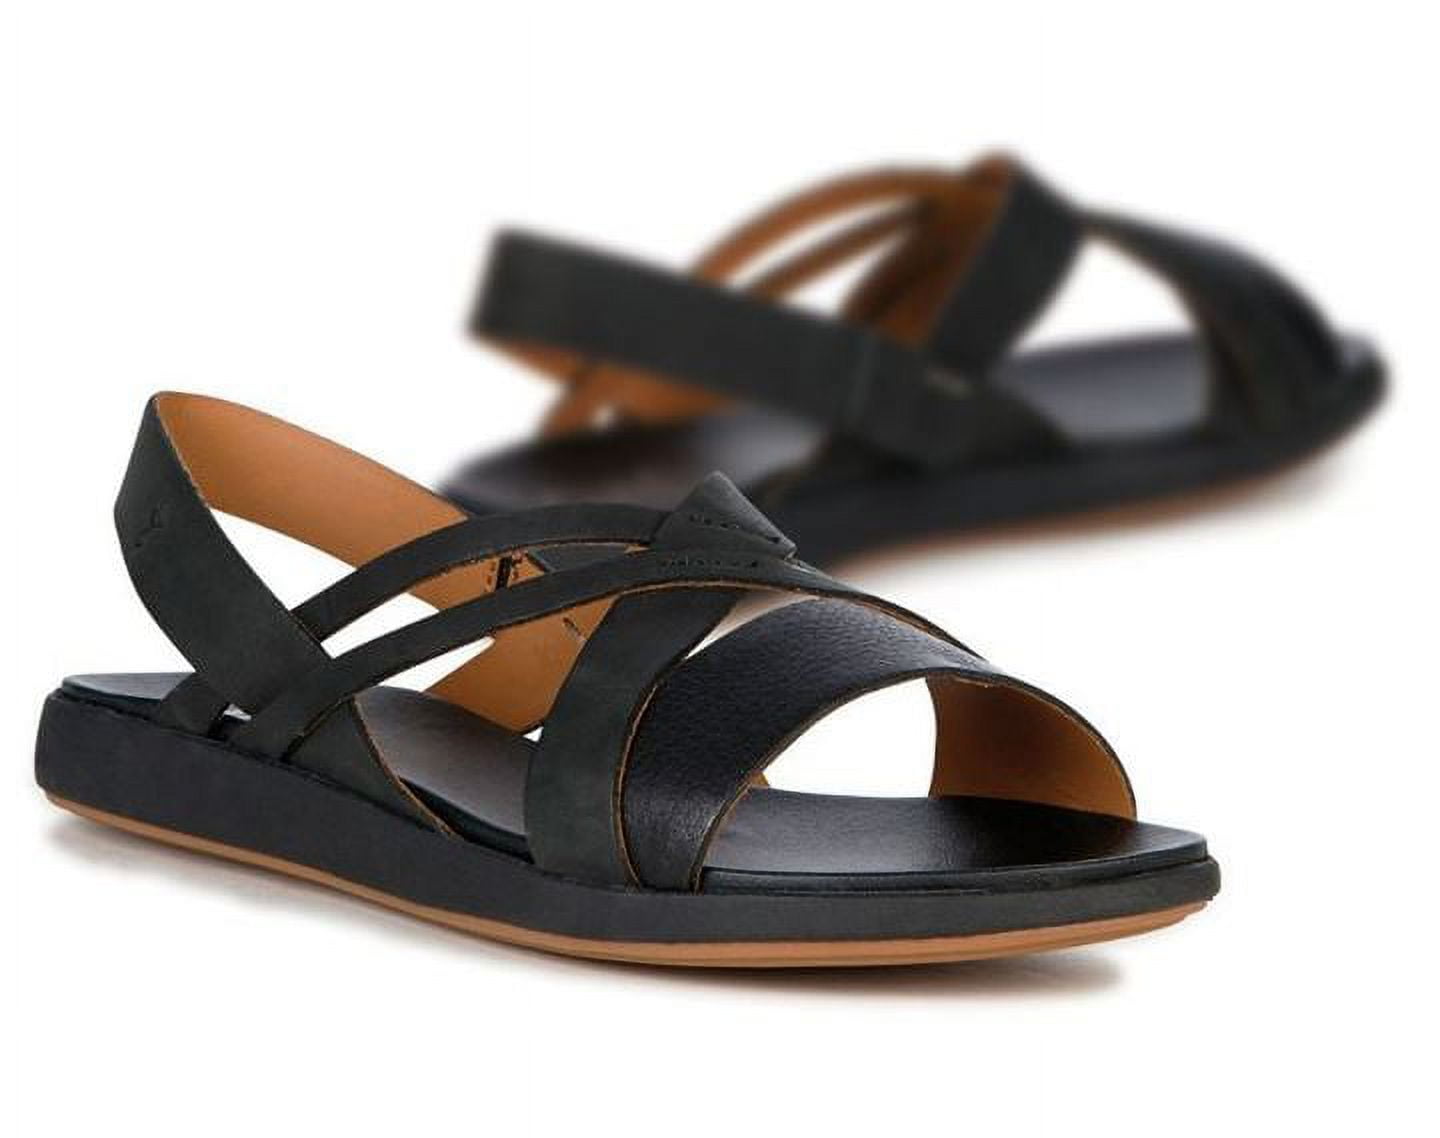 Details more than 179 black flat sandals australia latest